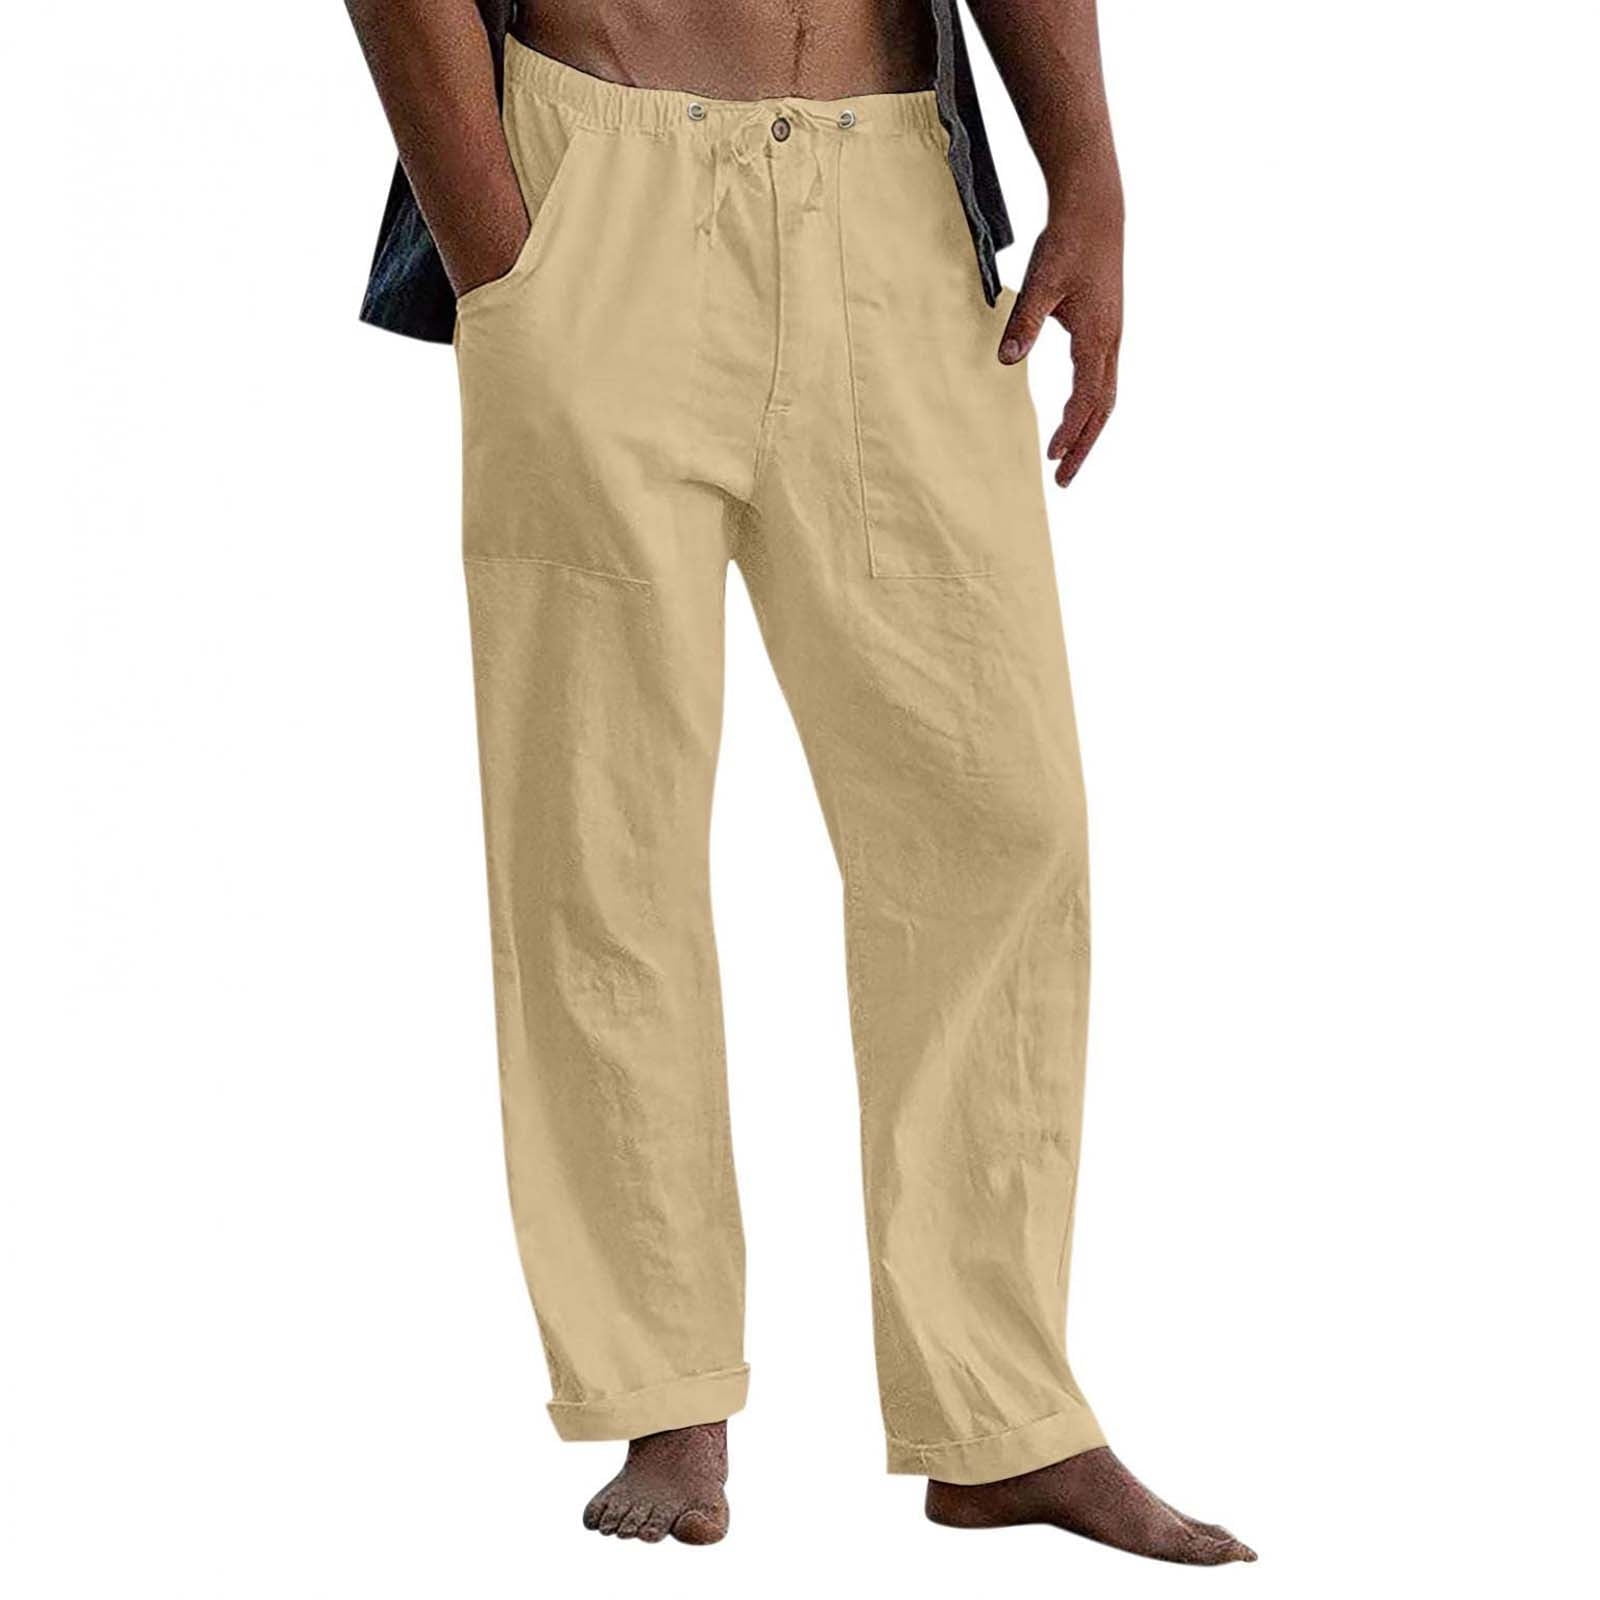 Xysaqa Men's Cotton Linen Pants Drawstring Elastic Waist Lightweight Pant  Summer Loose Casual Beach Trousers (Big & Tall Sizes) 